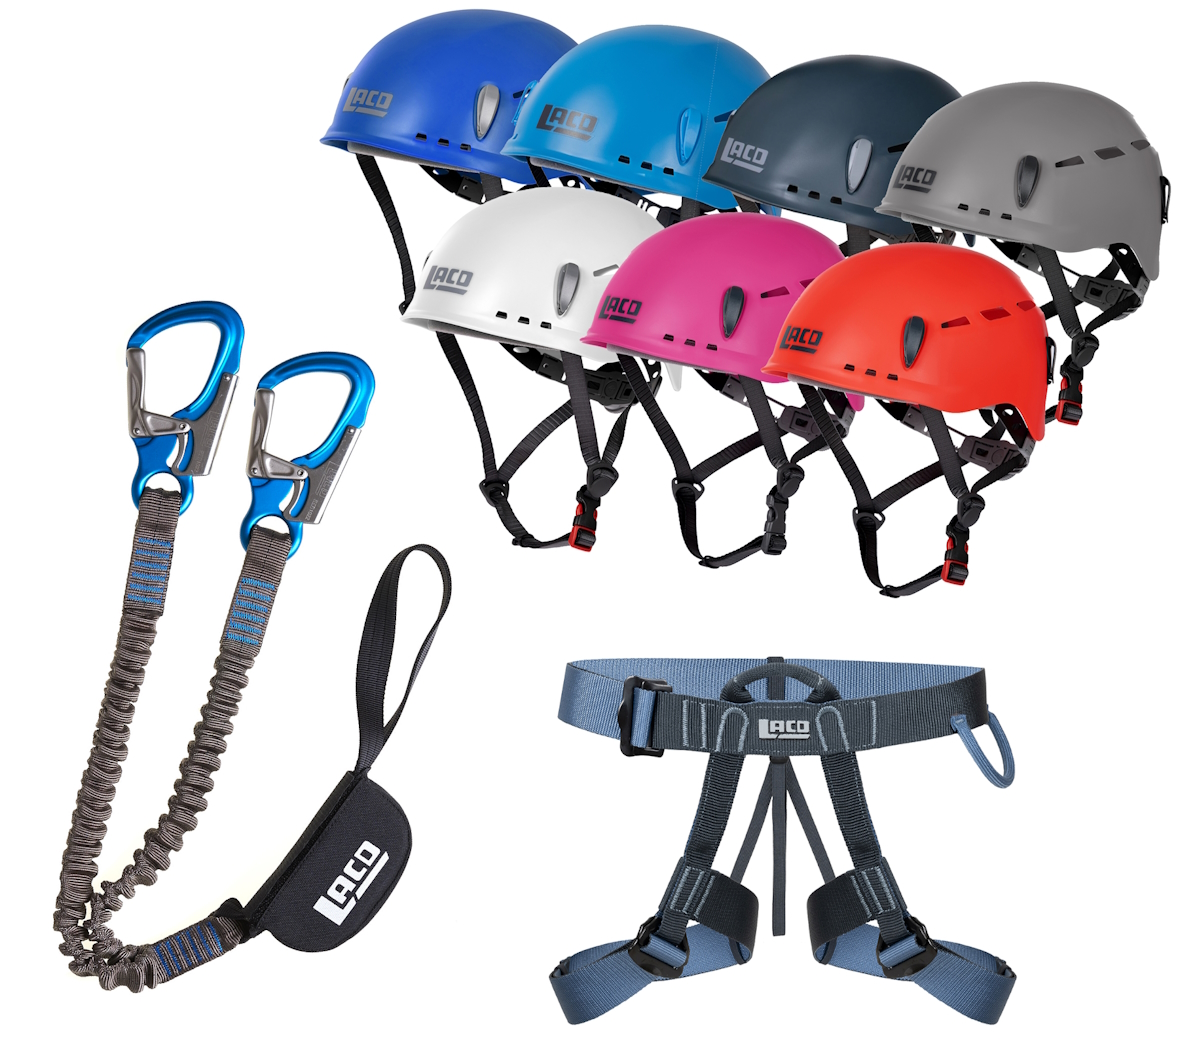 Klettersteigset LACD Pro + Gurt Easy EXP + Helm Protector 2.0 